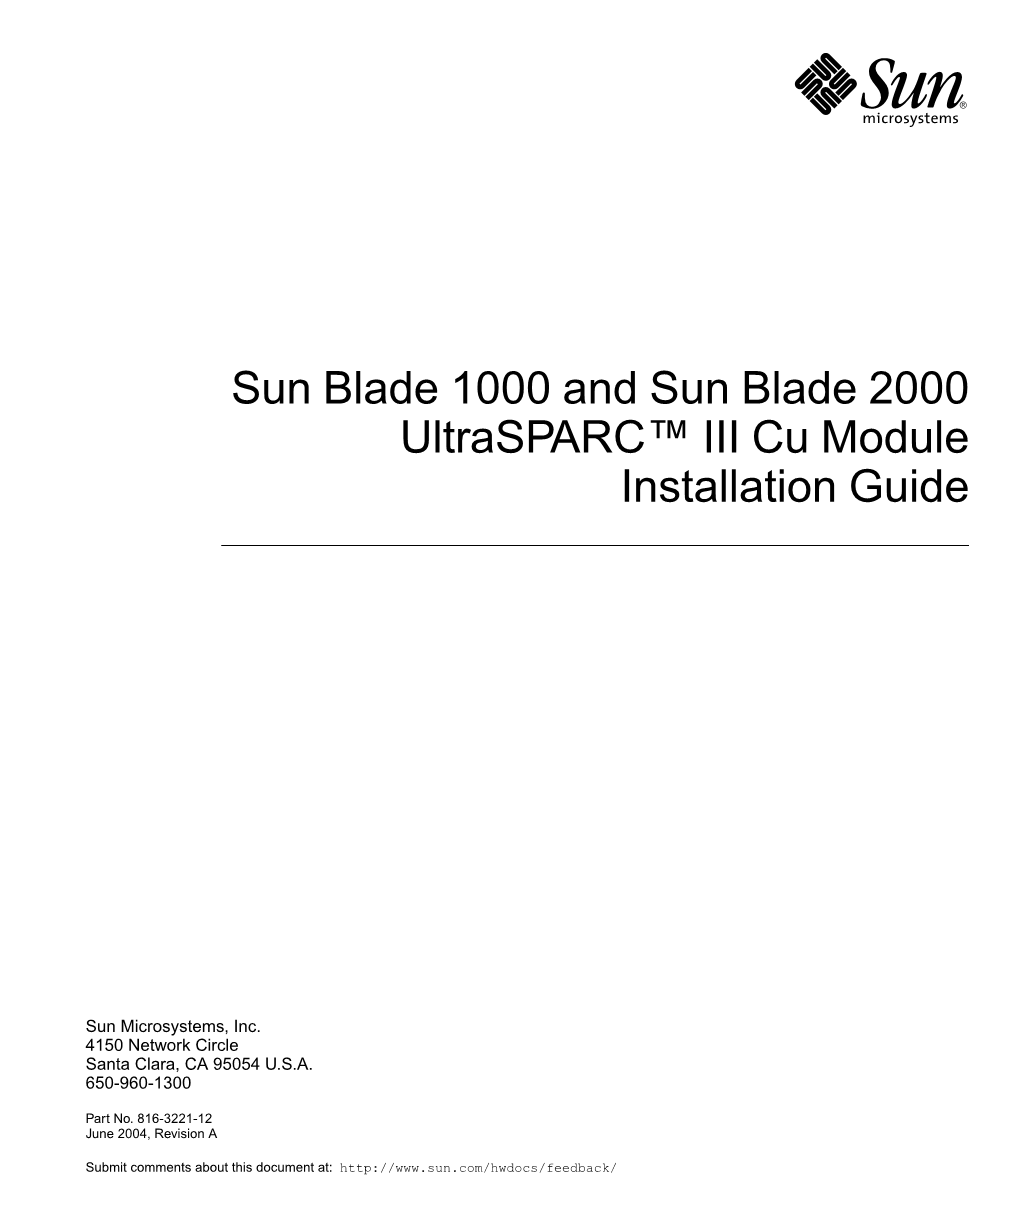 Sun Blade 1000 and Sun Blade 2000 Ultrasparc III Cu Module